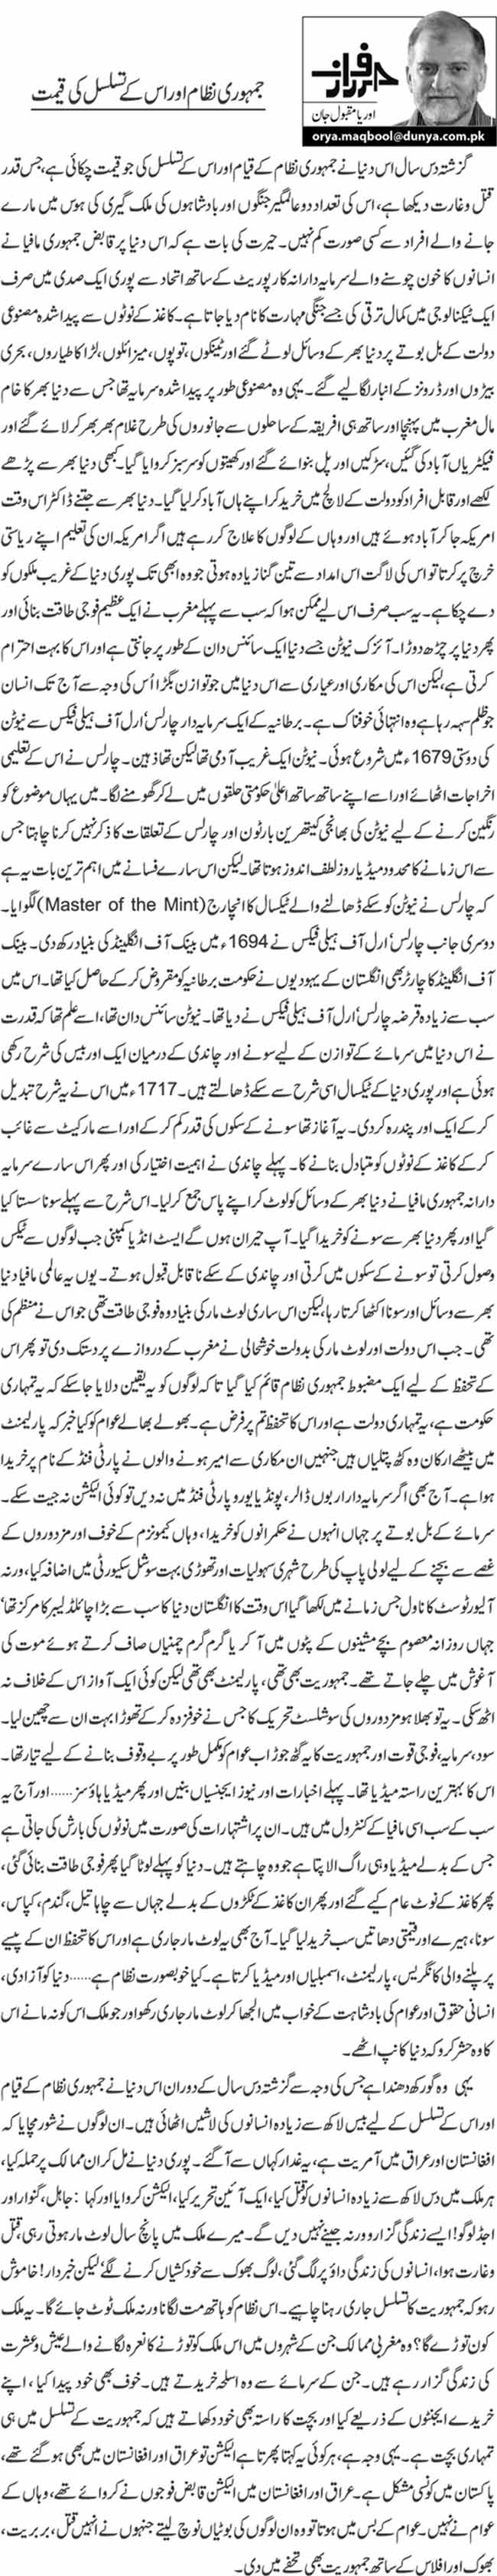 Jumhori Nizam Aur Is Kay Tasalsal Key Qemat By Orya Maqbool Jaan